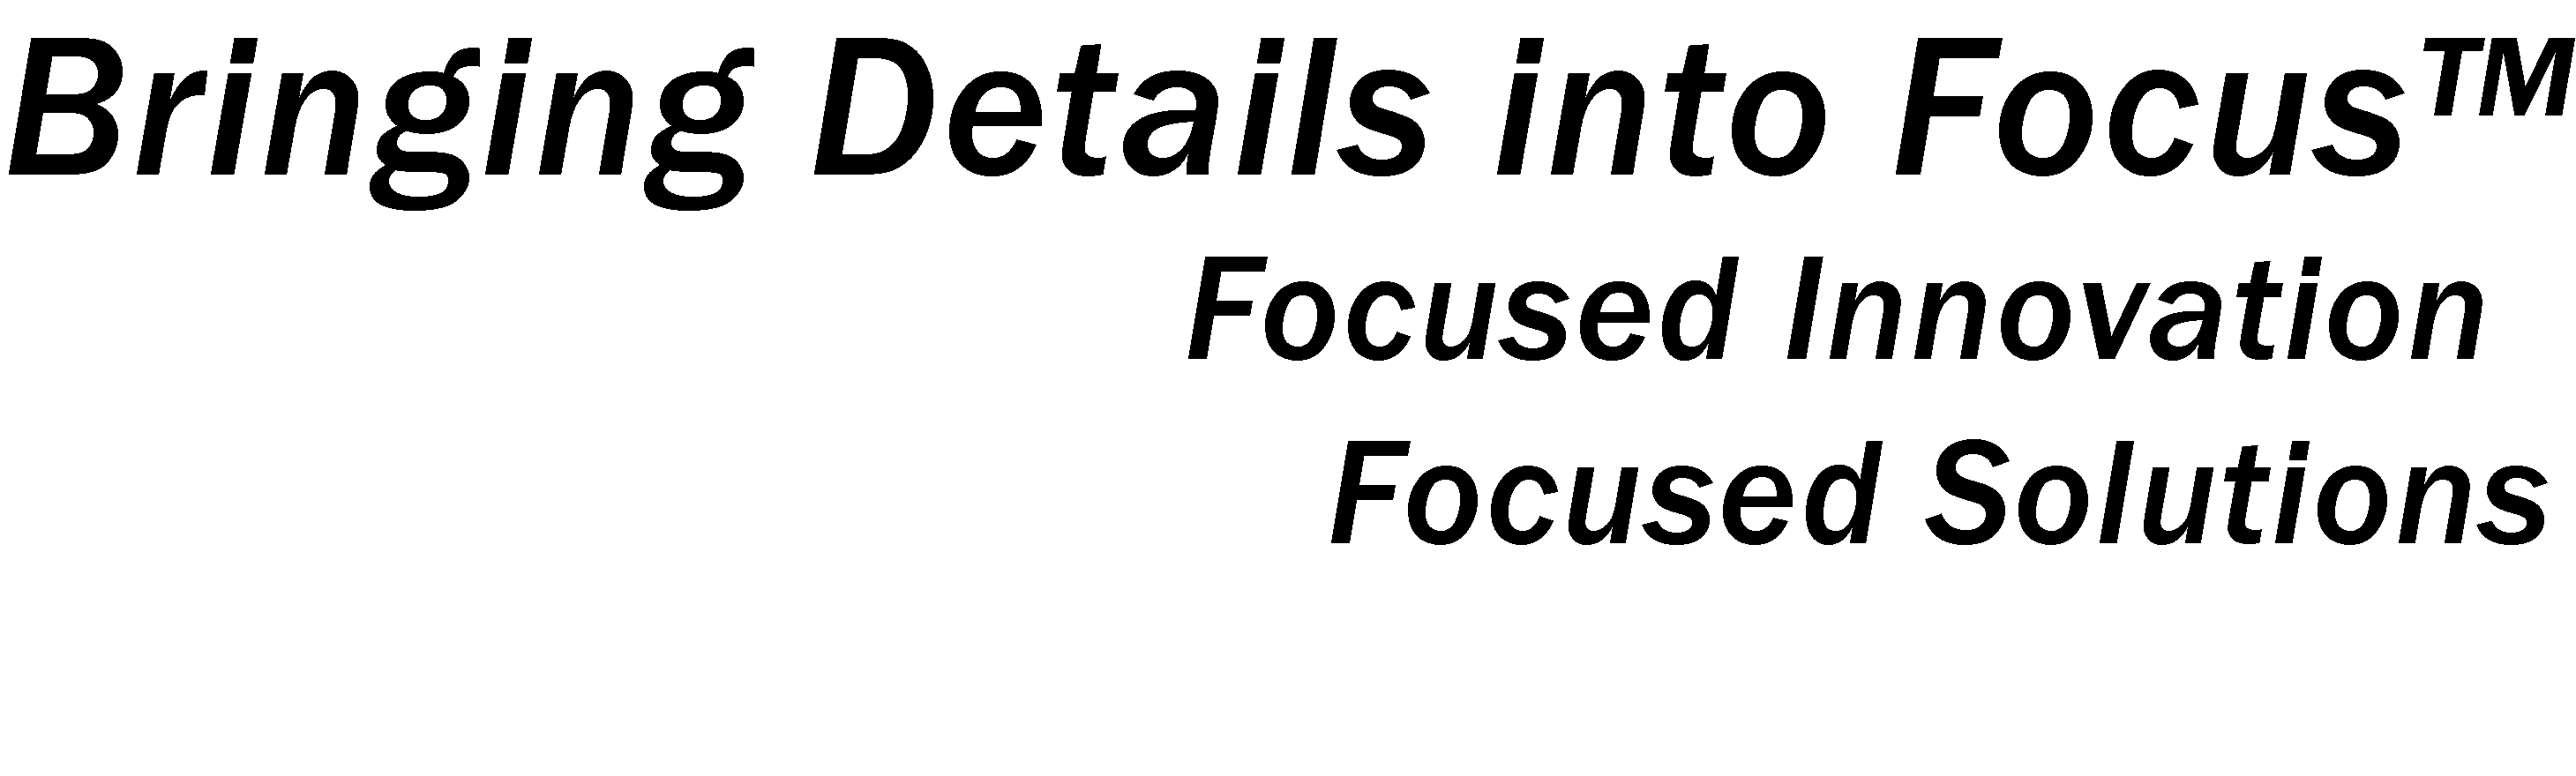 Bringing Details into Focus™; Focused Innovation, Focused Solutions